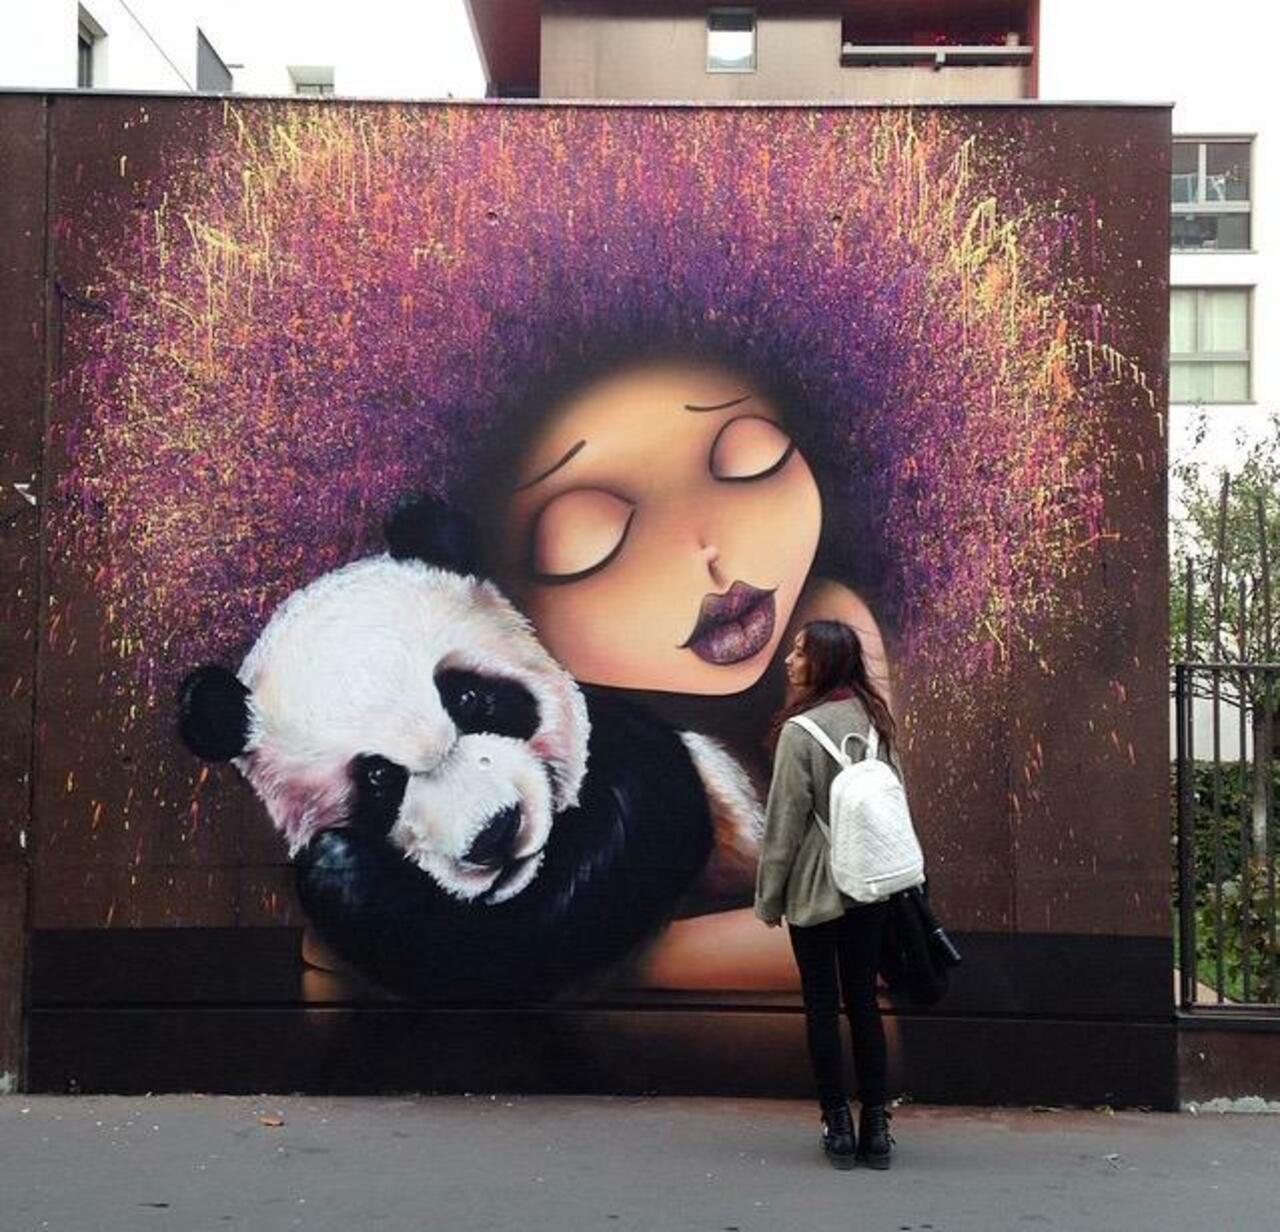 Street Art by VinieGraffiti in Paris 

#art #graffiti #mural #streetart http://t.co/lhRqjh5Ga9